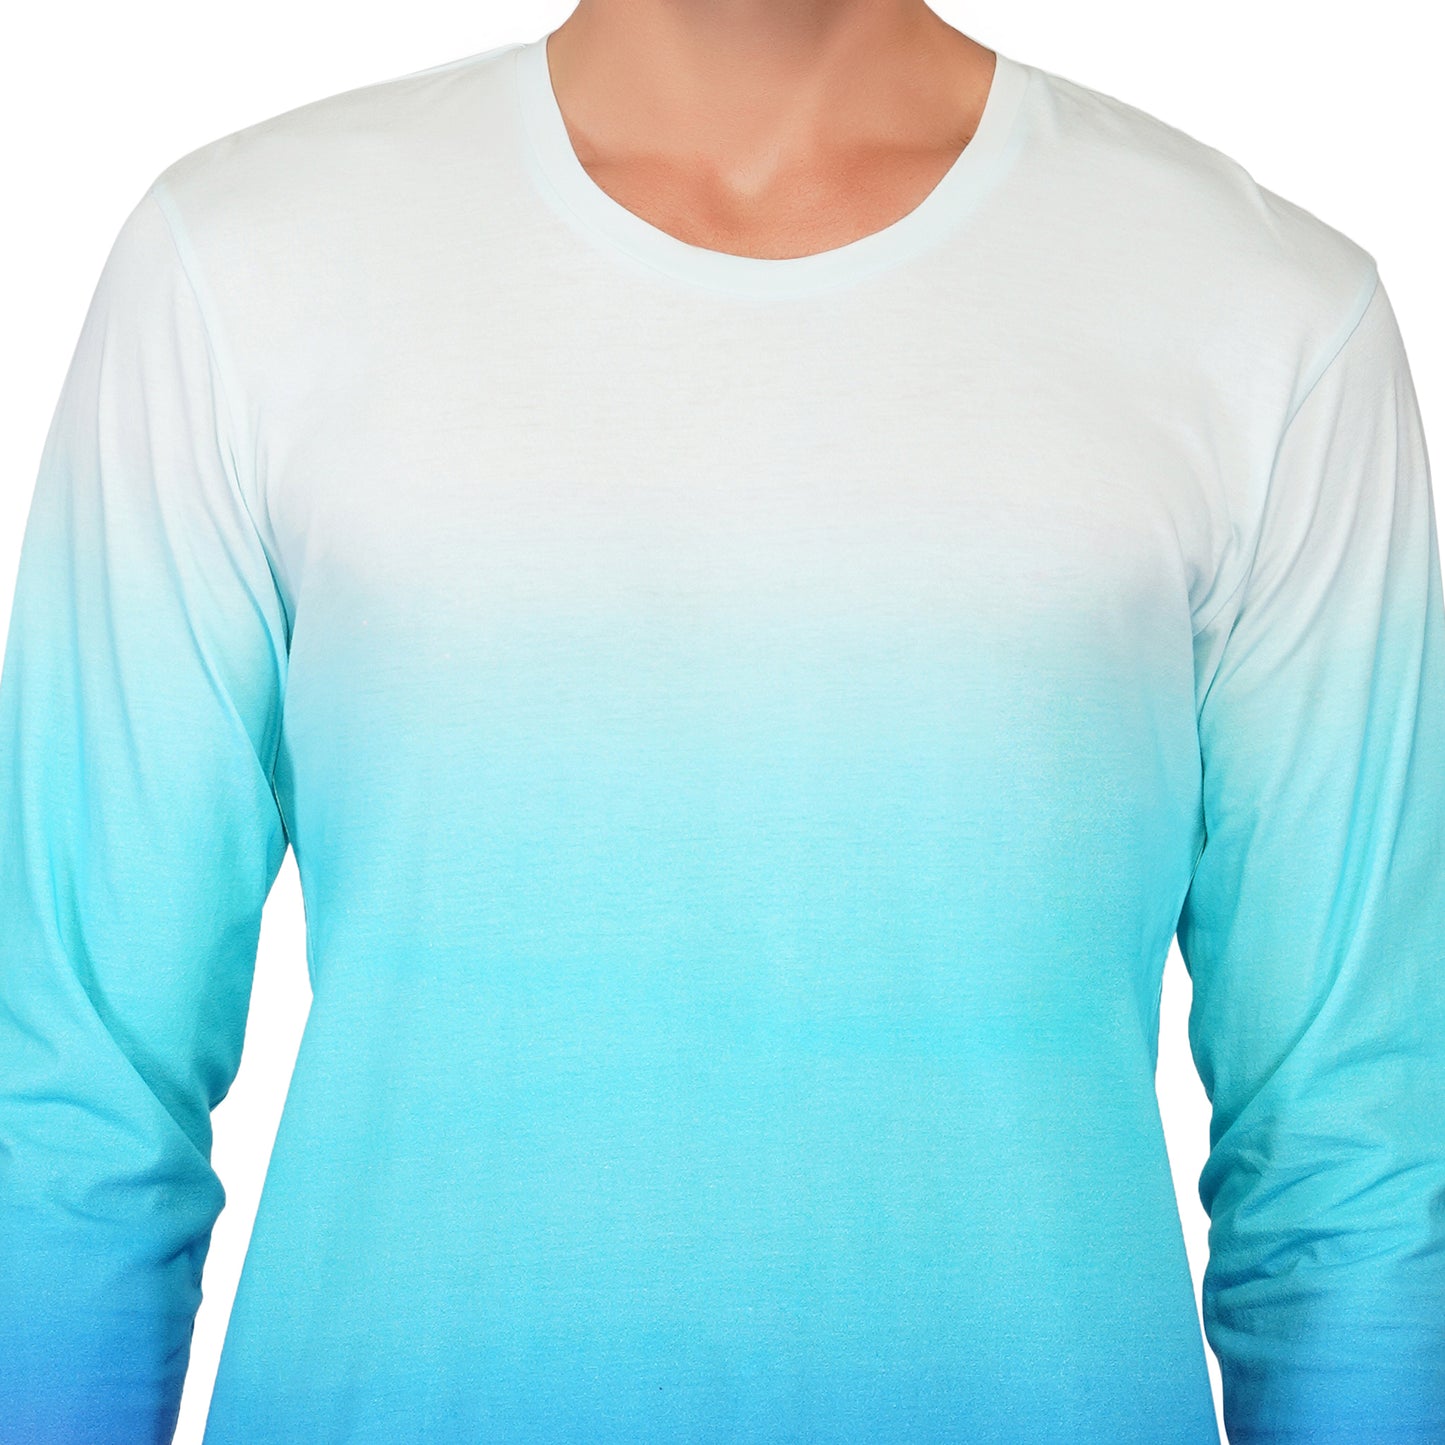 SLAY. Men's White to Blue Ombre Full Sleeves T Shirt & Pants Co-ord Set